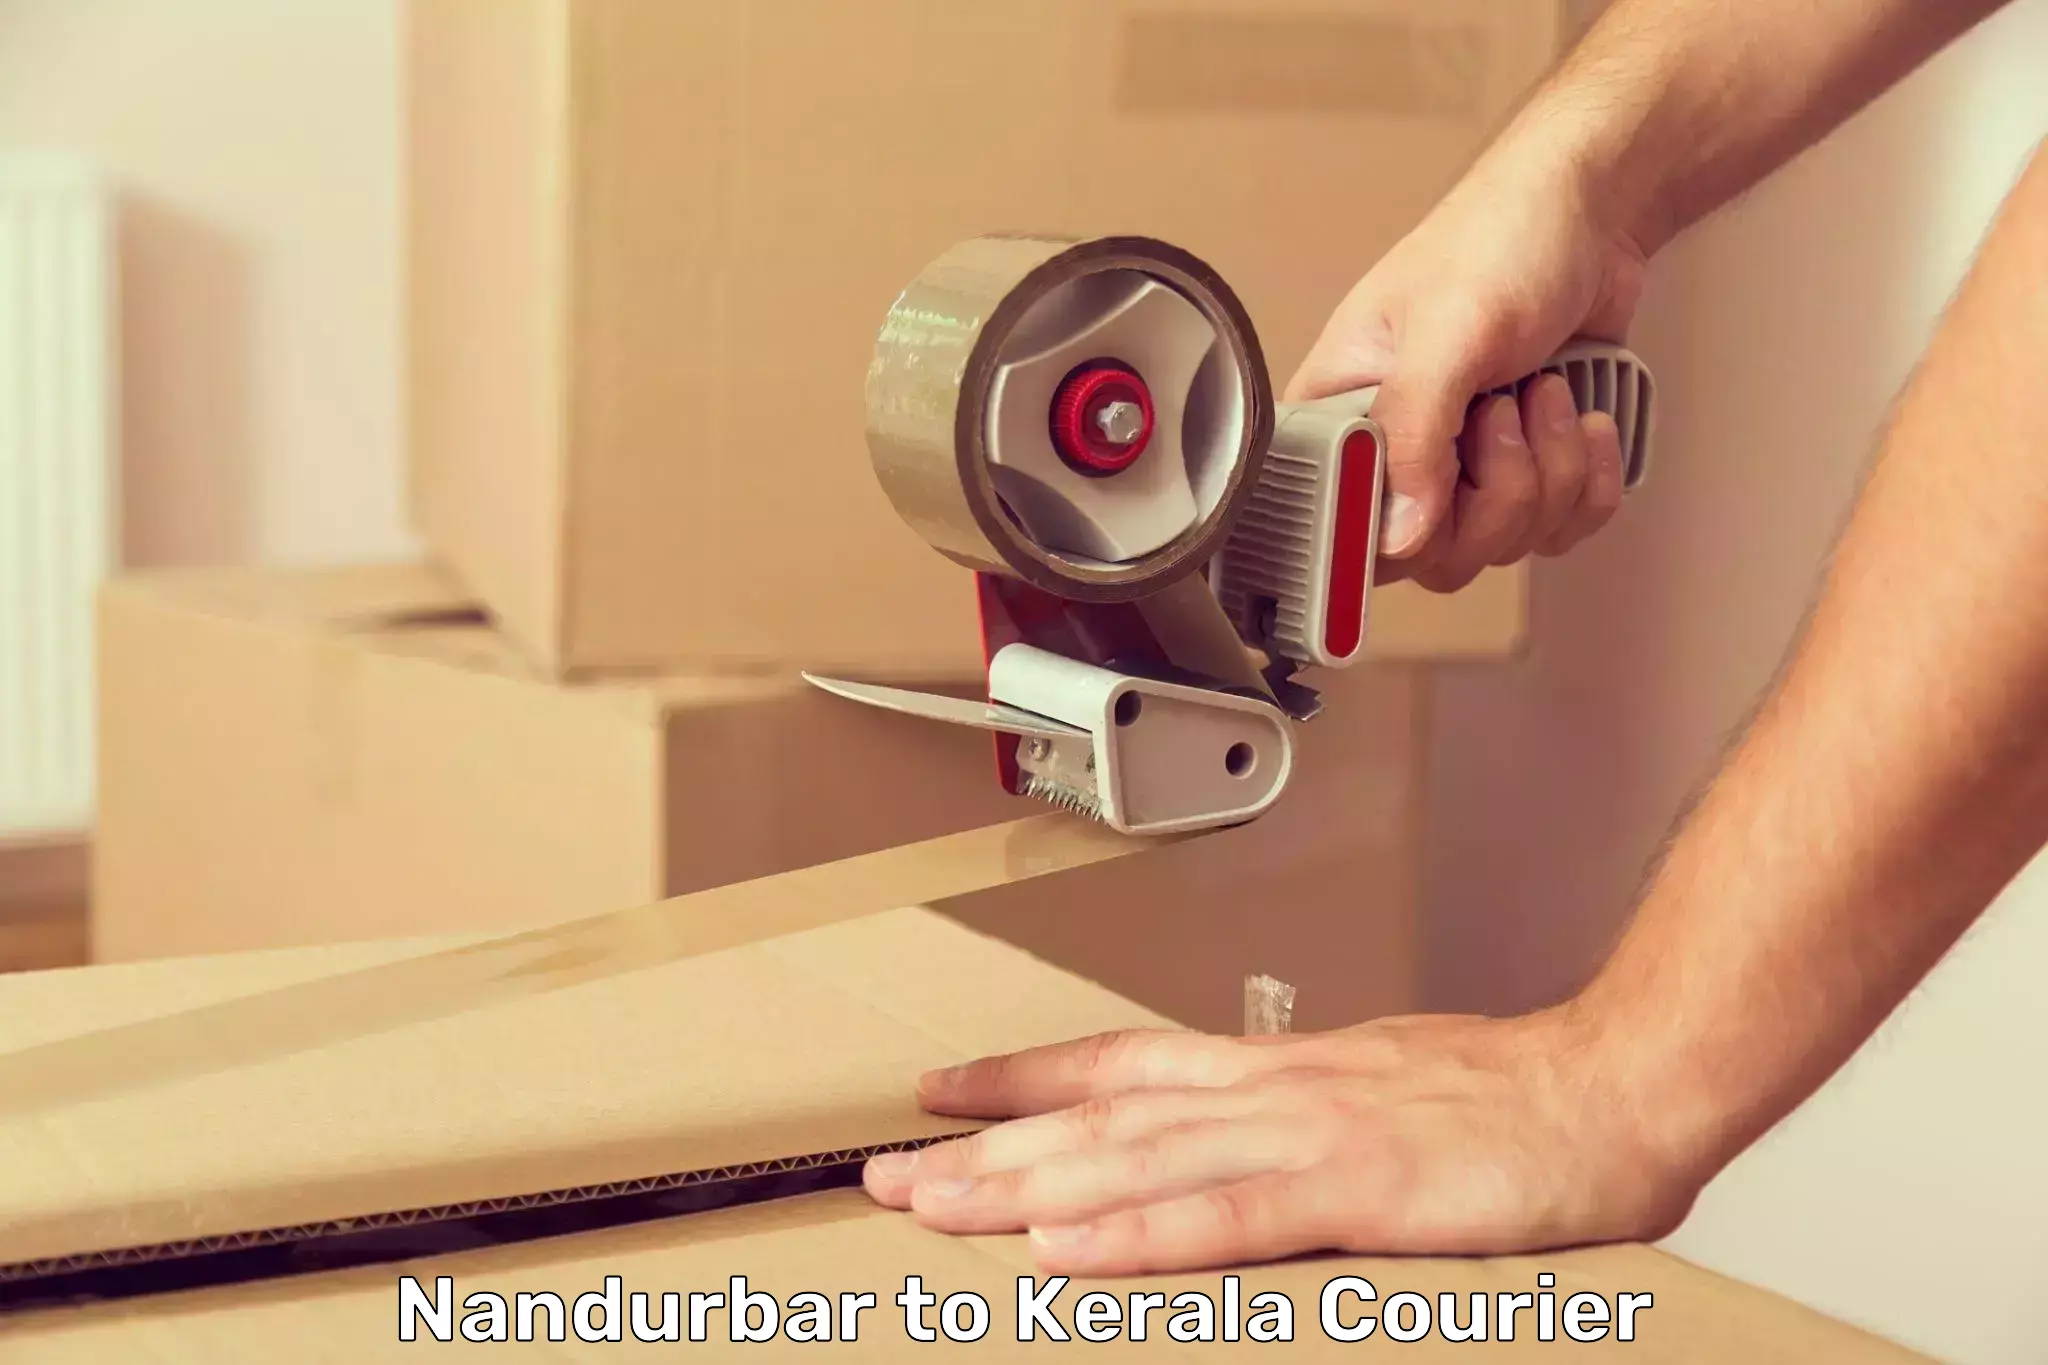 Quick dispatch service Nandurbar to Kerala